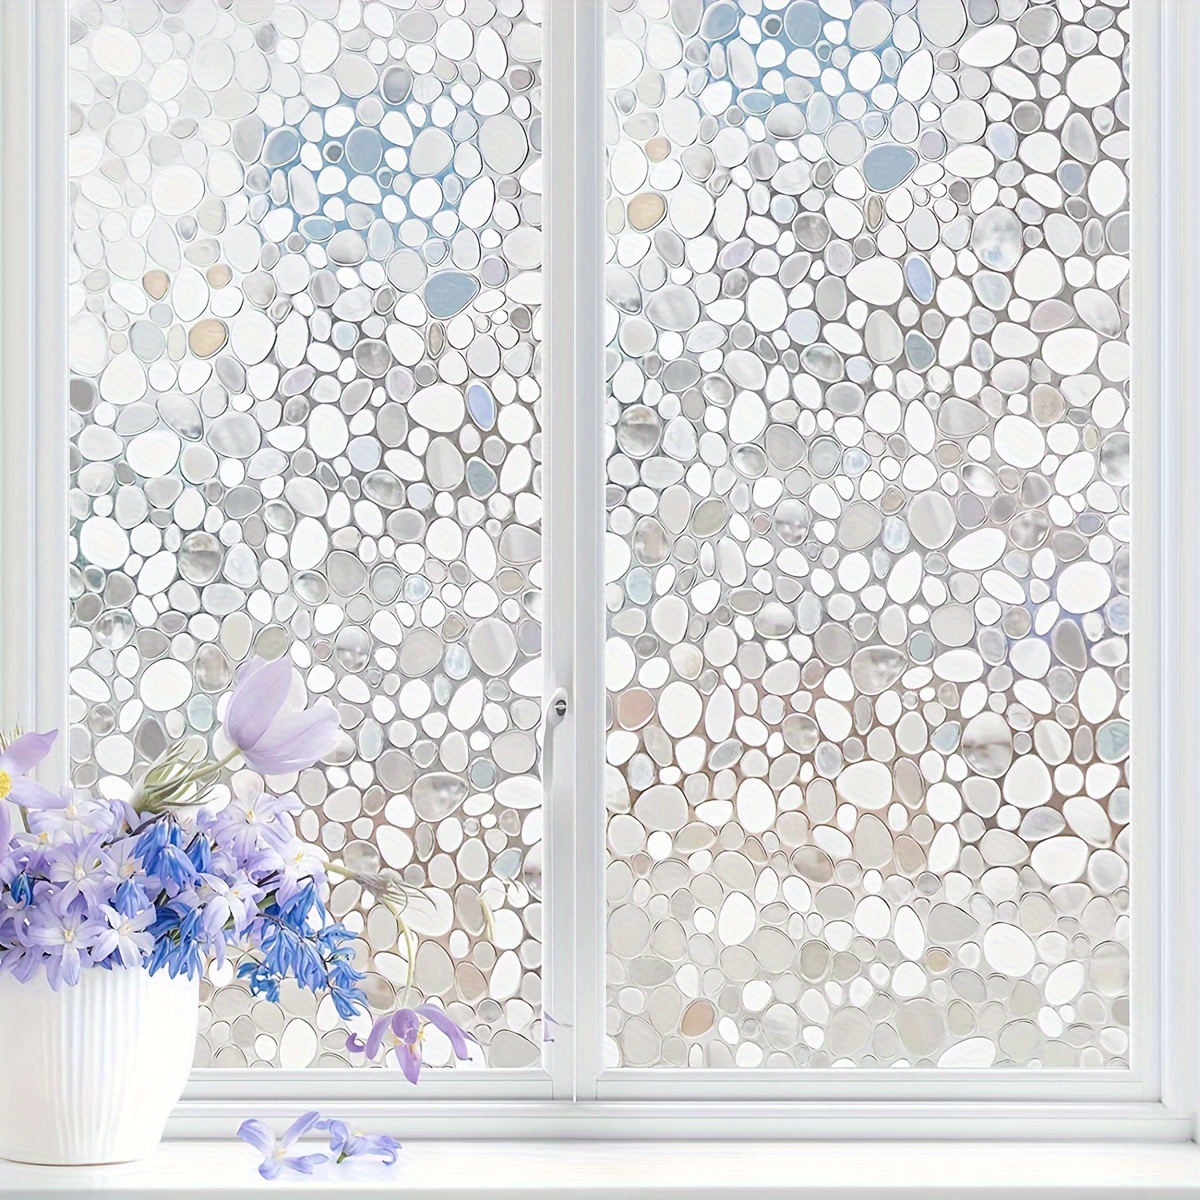  PVCOLL Glasfolie Fensterfolien 3D Fensteraufkleber Wald Flüstern  Fensterfolie Glas Aufkleber Balkon matt transparent opak matt Fensterfolie  Bad Glastür Aufkleber Anti-Licht, 60cm * 90cm